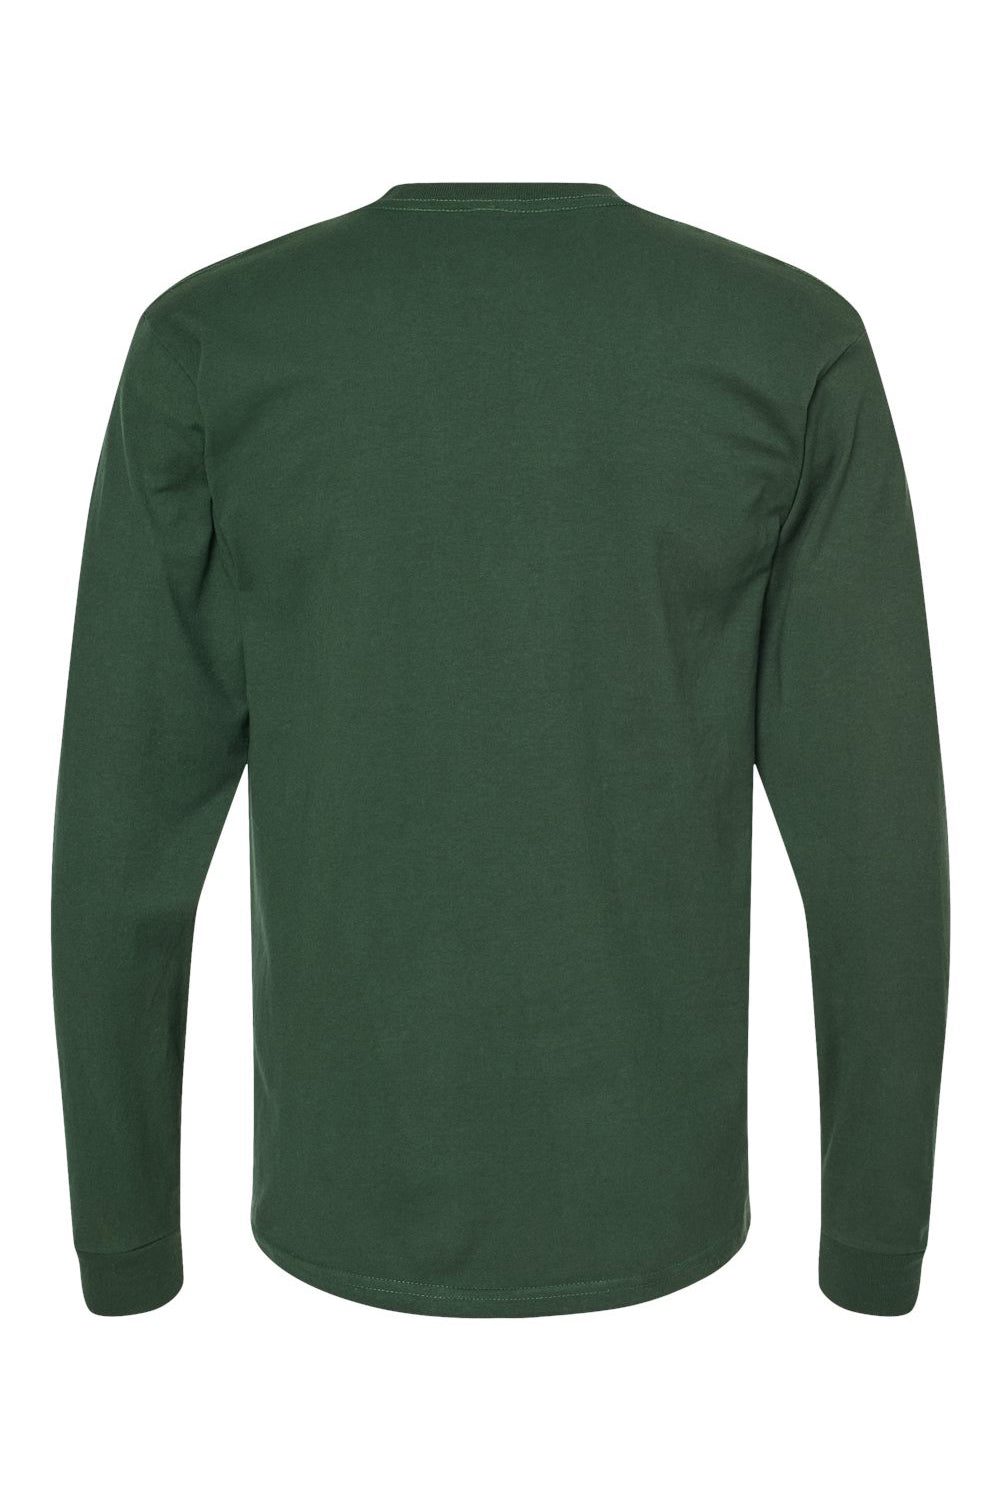 Tultex 291 Mens Jersey Long Sleeve Crewneck T-Shirt Hunter Green Flat Back